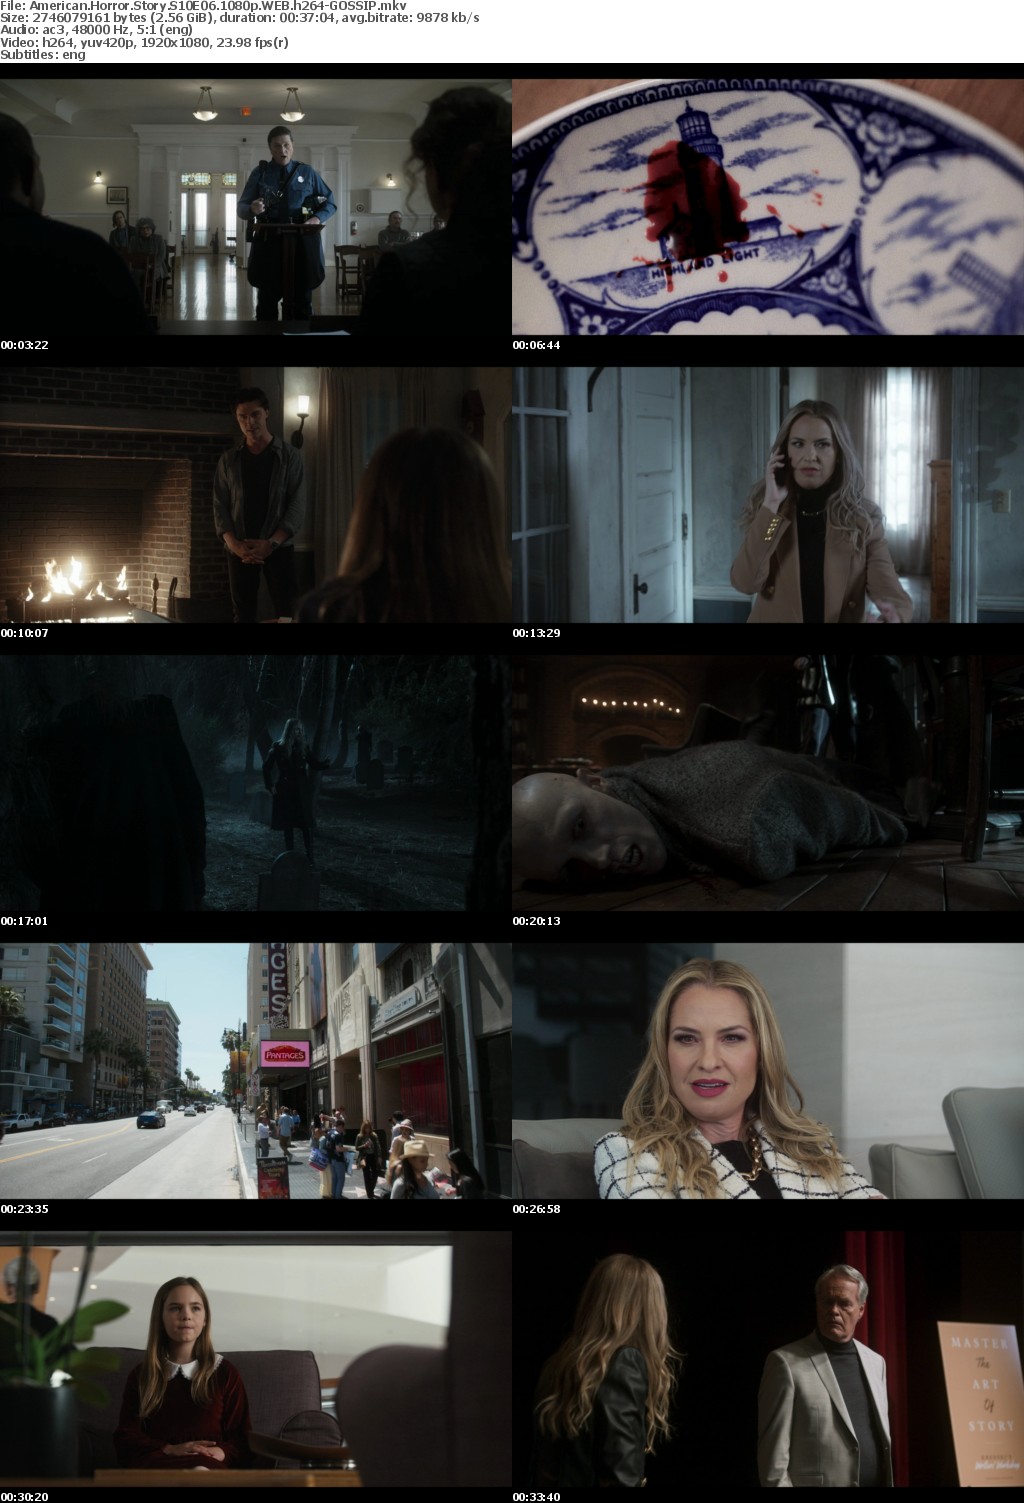 American Horror Story S10E06 1080p WEB h264-GOSSIP